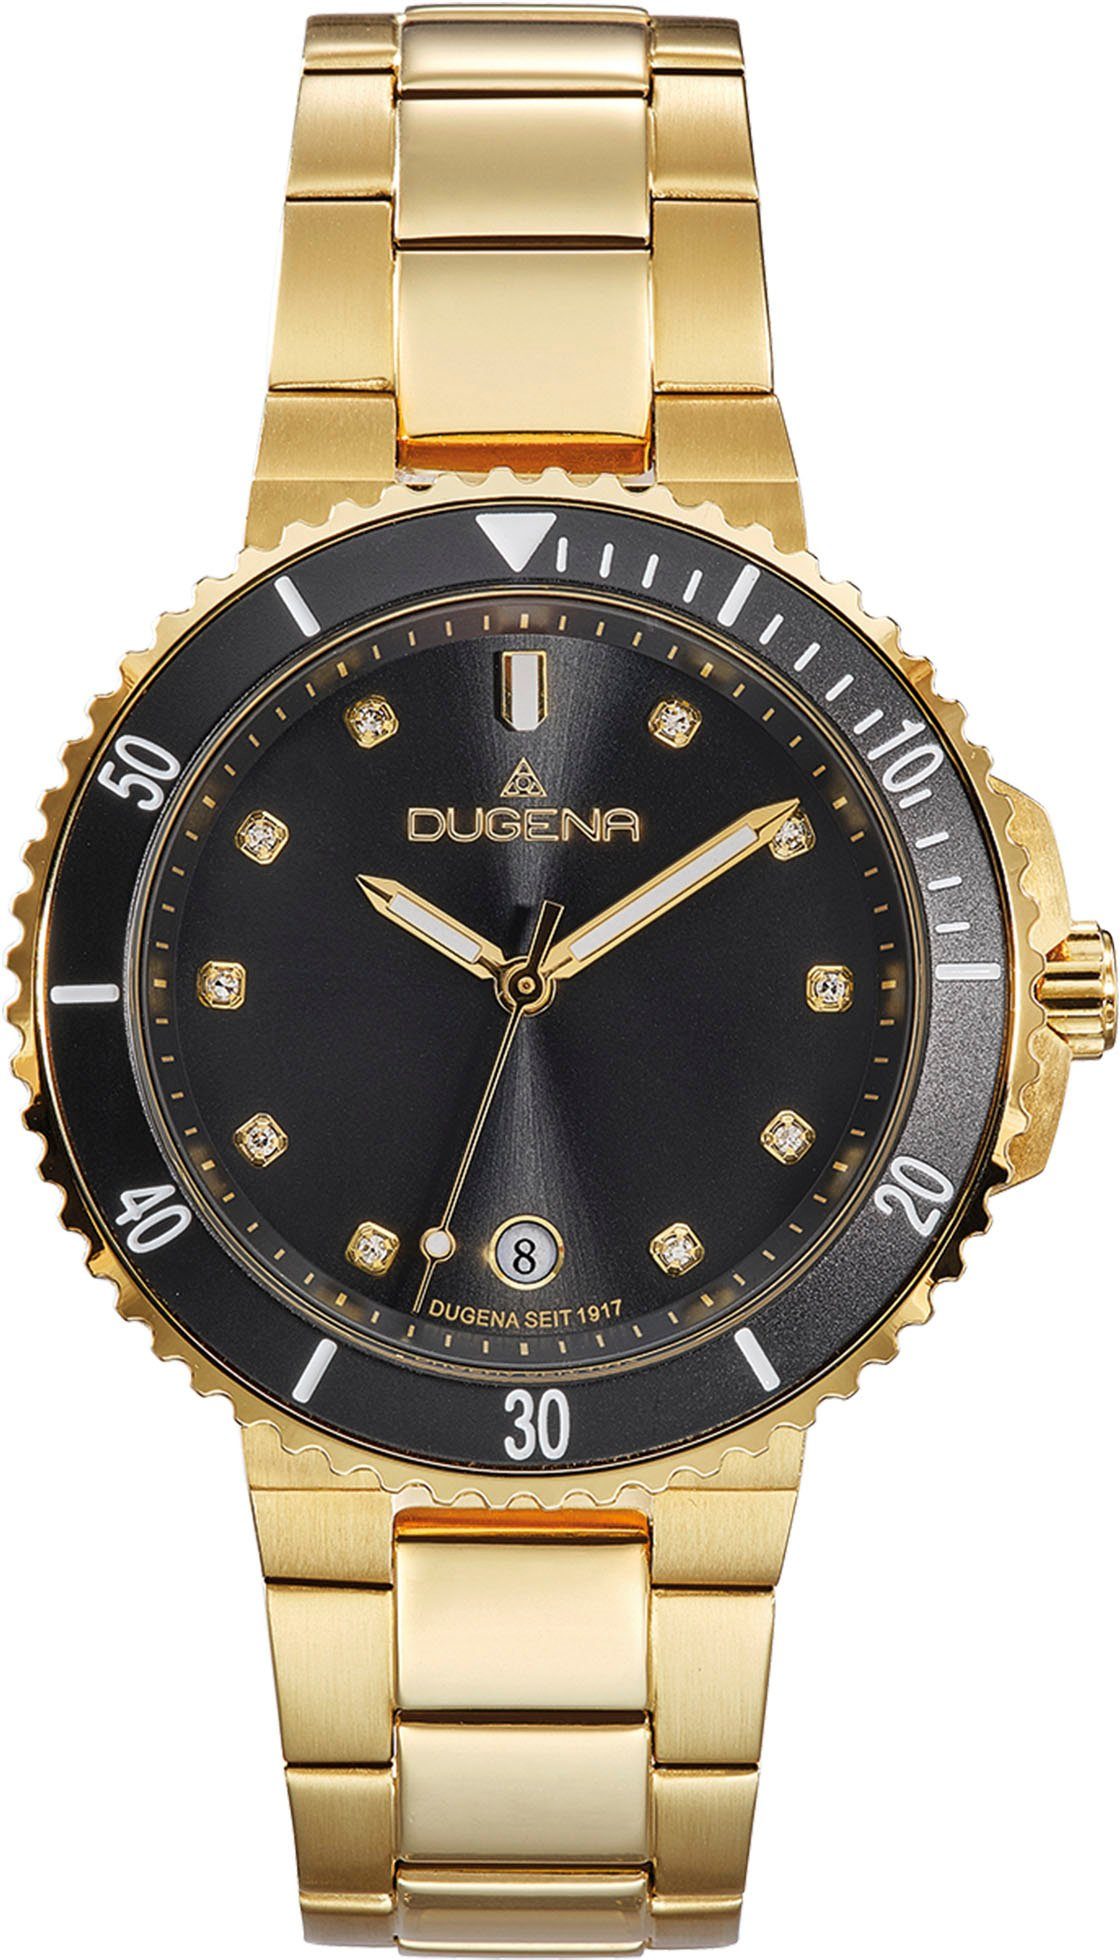 Dugena Quarzuhr Lady Diver, 4461102, Armbanduhr, Damenuhr, Datum, Leuchtzeiger